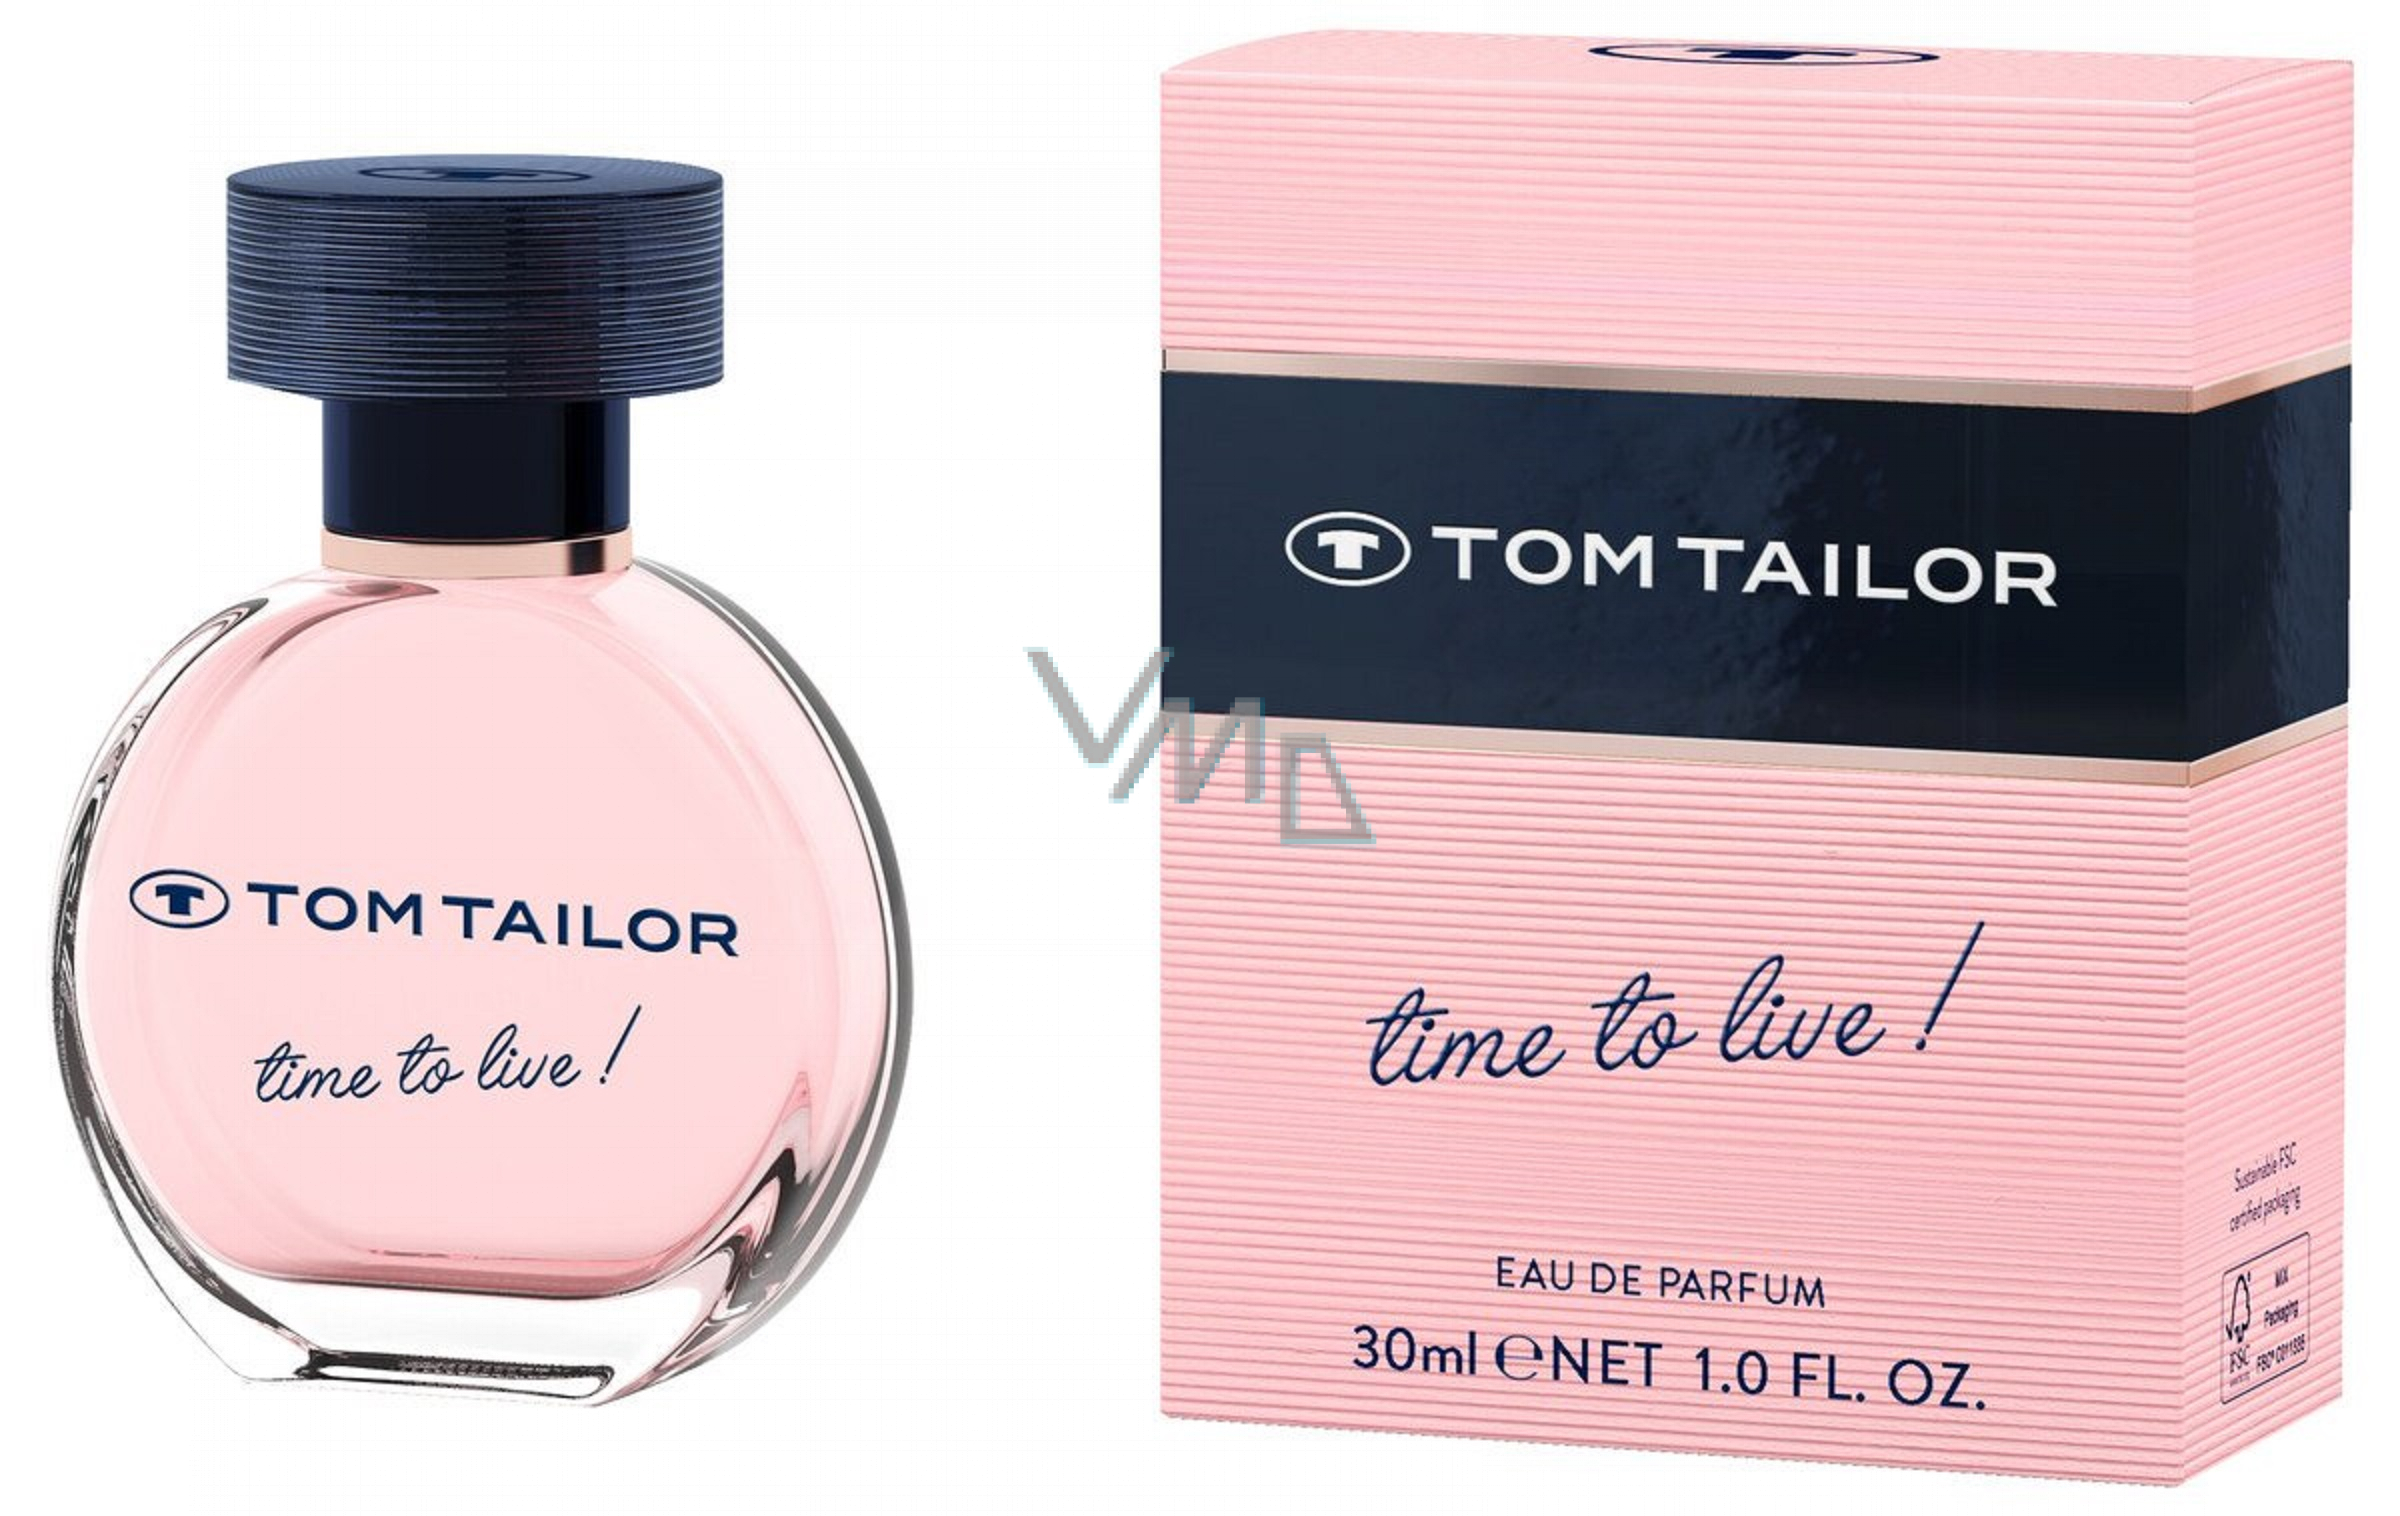 Tom Tailor Time to live! for Her eau de parfum for women 30 ml - VMD  parfumerie - drogerie